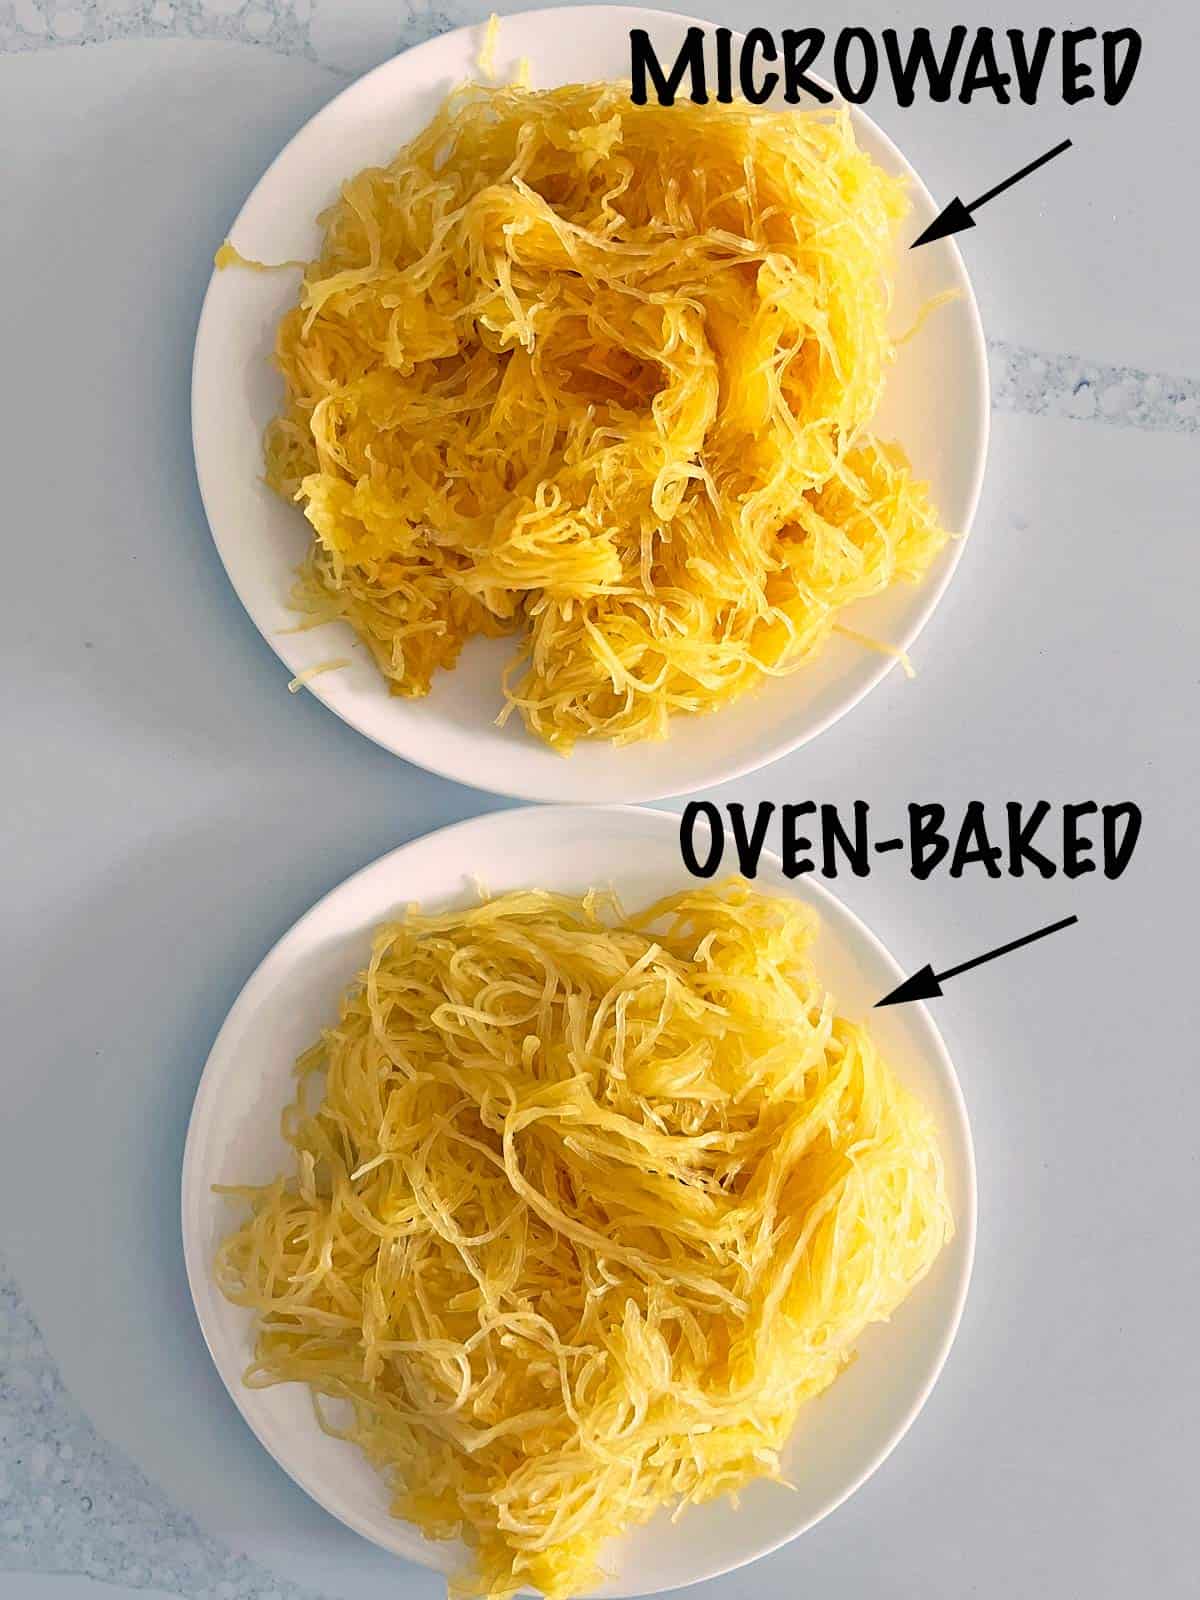 Microwaved vs. baked spaghetti squash.